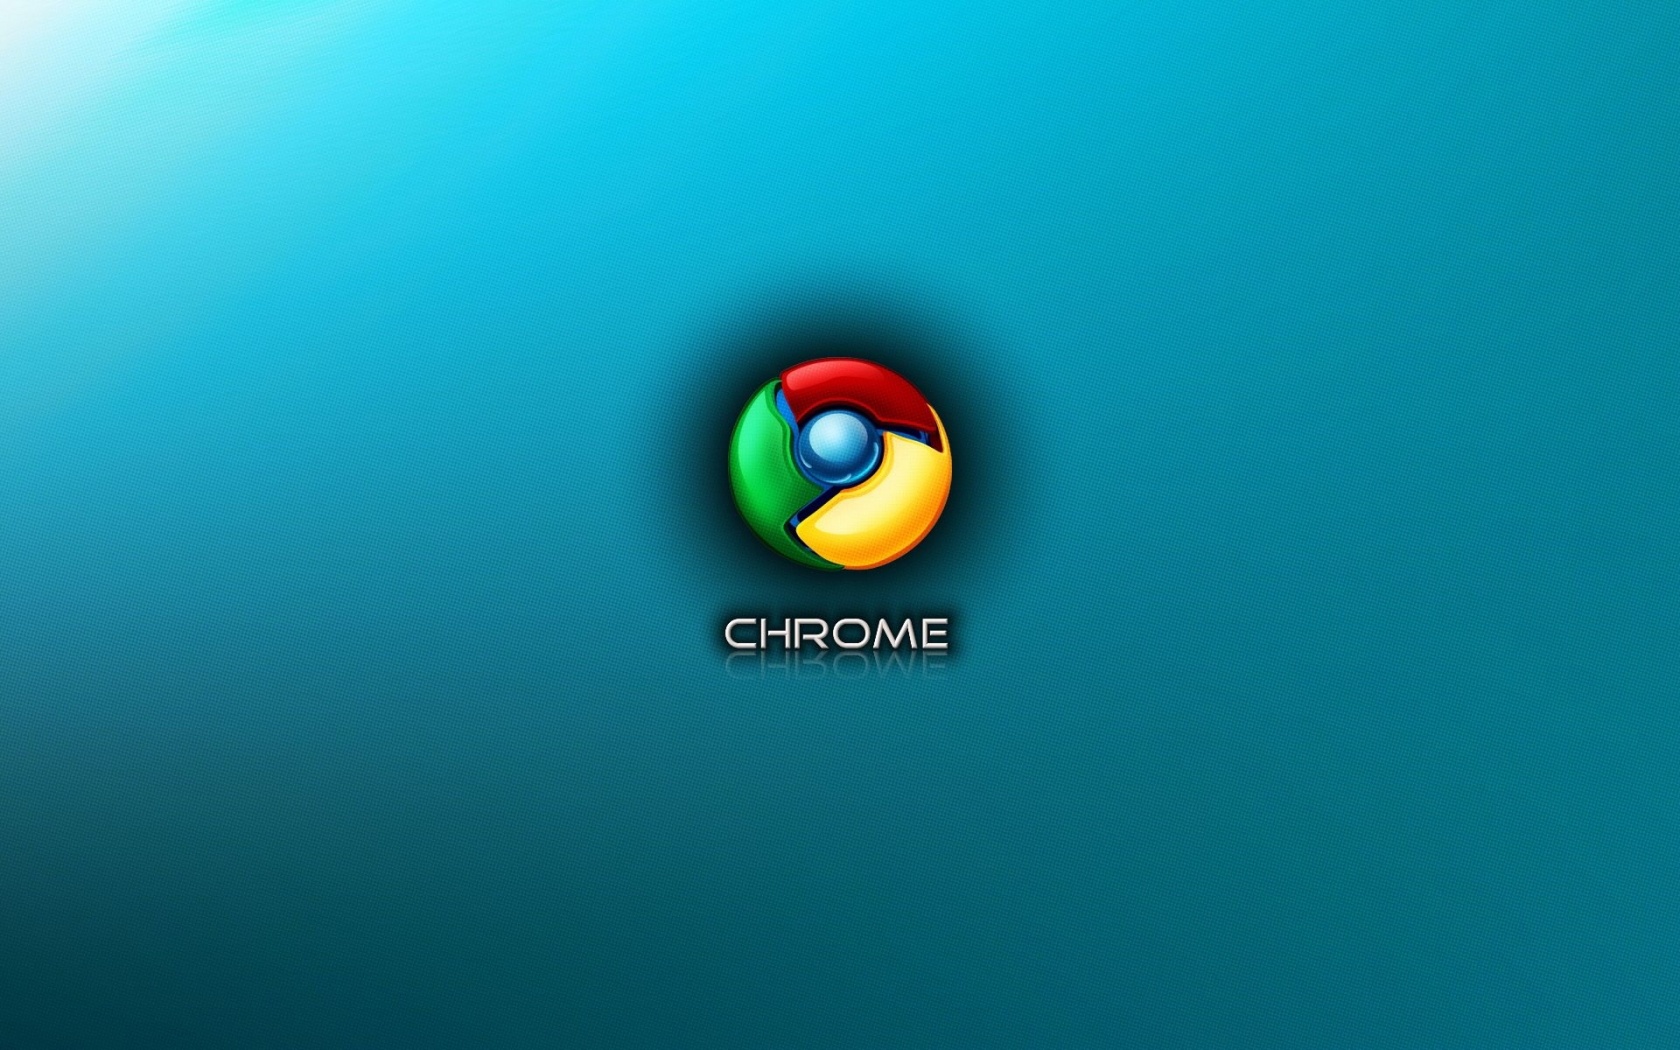 Chrome HD Wallpaper